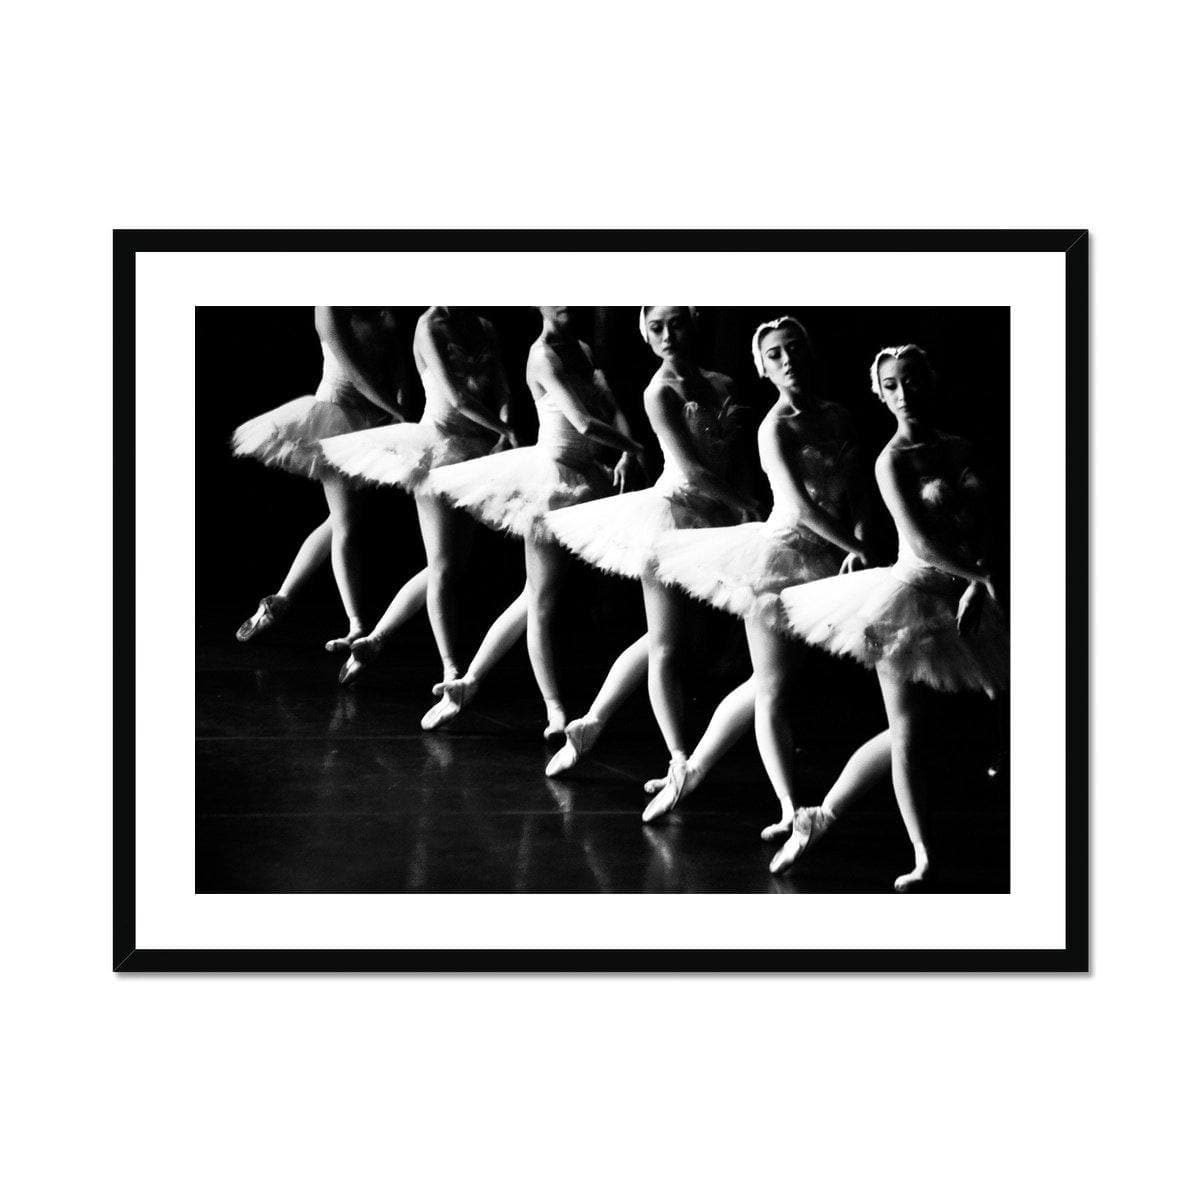 Ballerinas - Sean Lee-Davies Sean Lee Davies